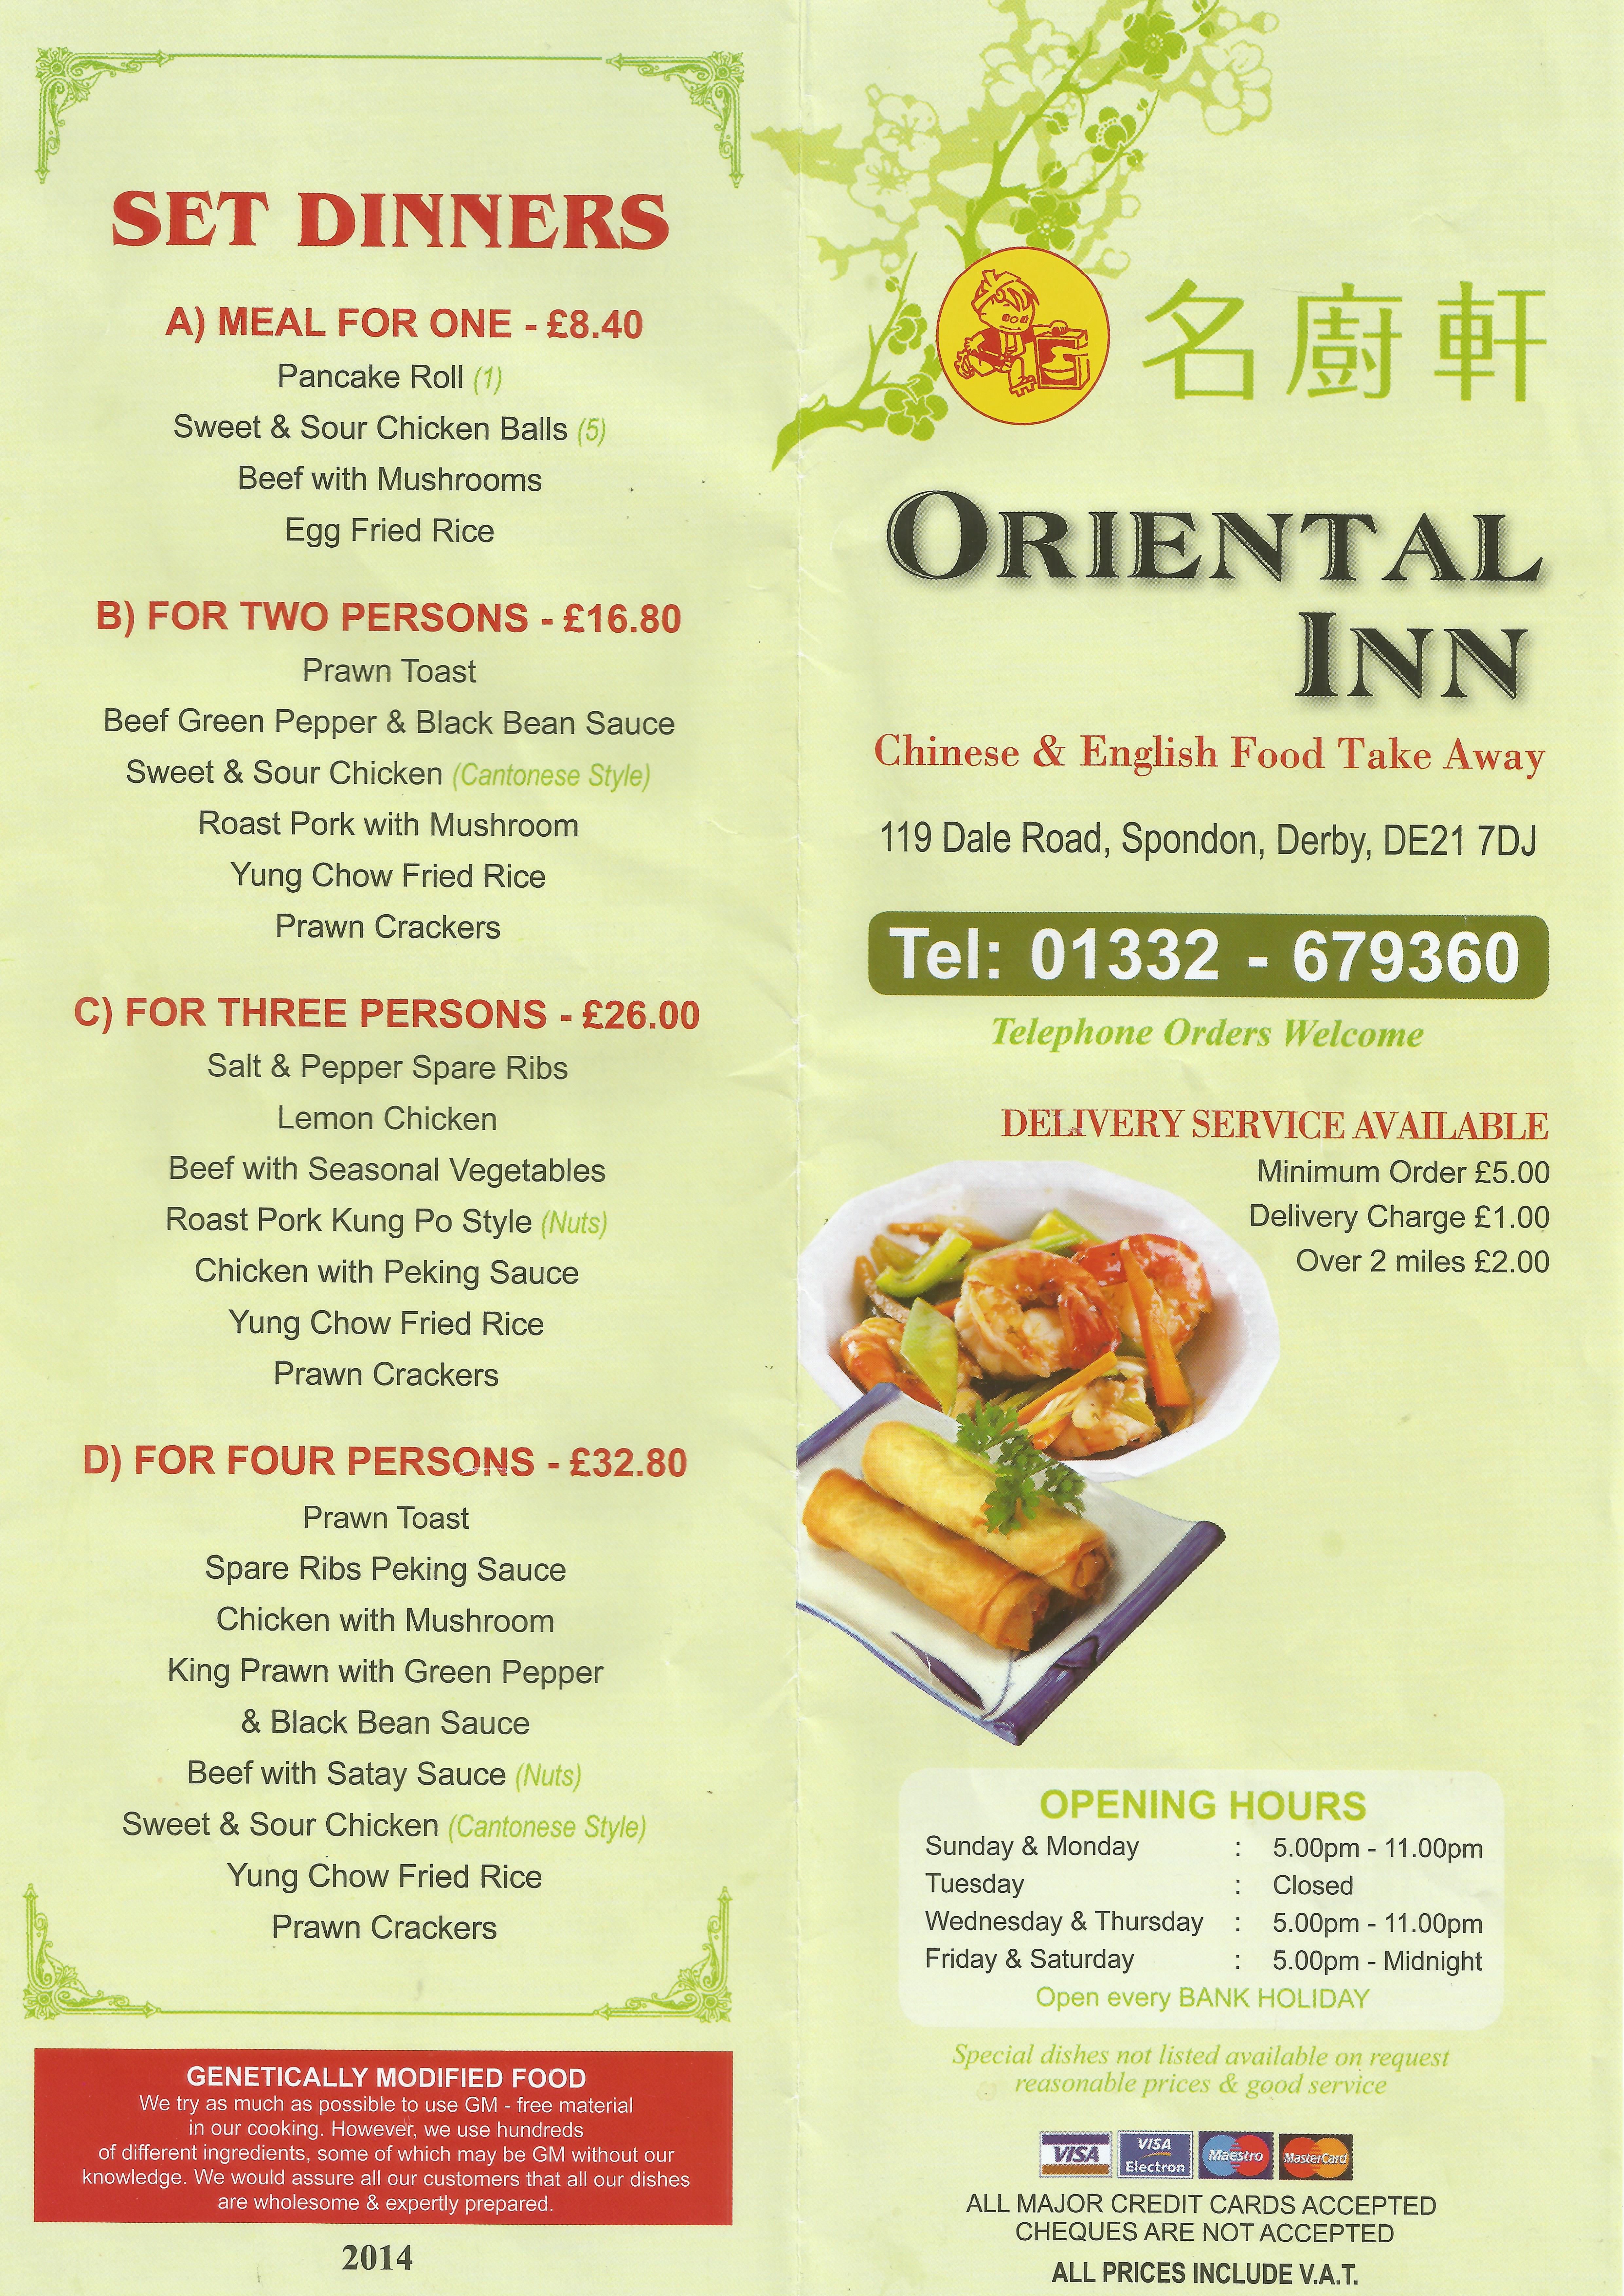 Oriental Inn Chinese restaurant on Dale Road, Spondon,derby - Everymenu